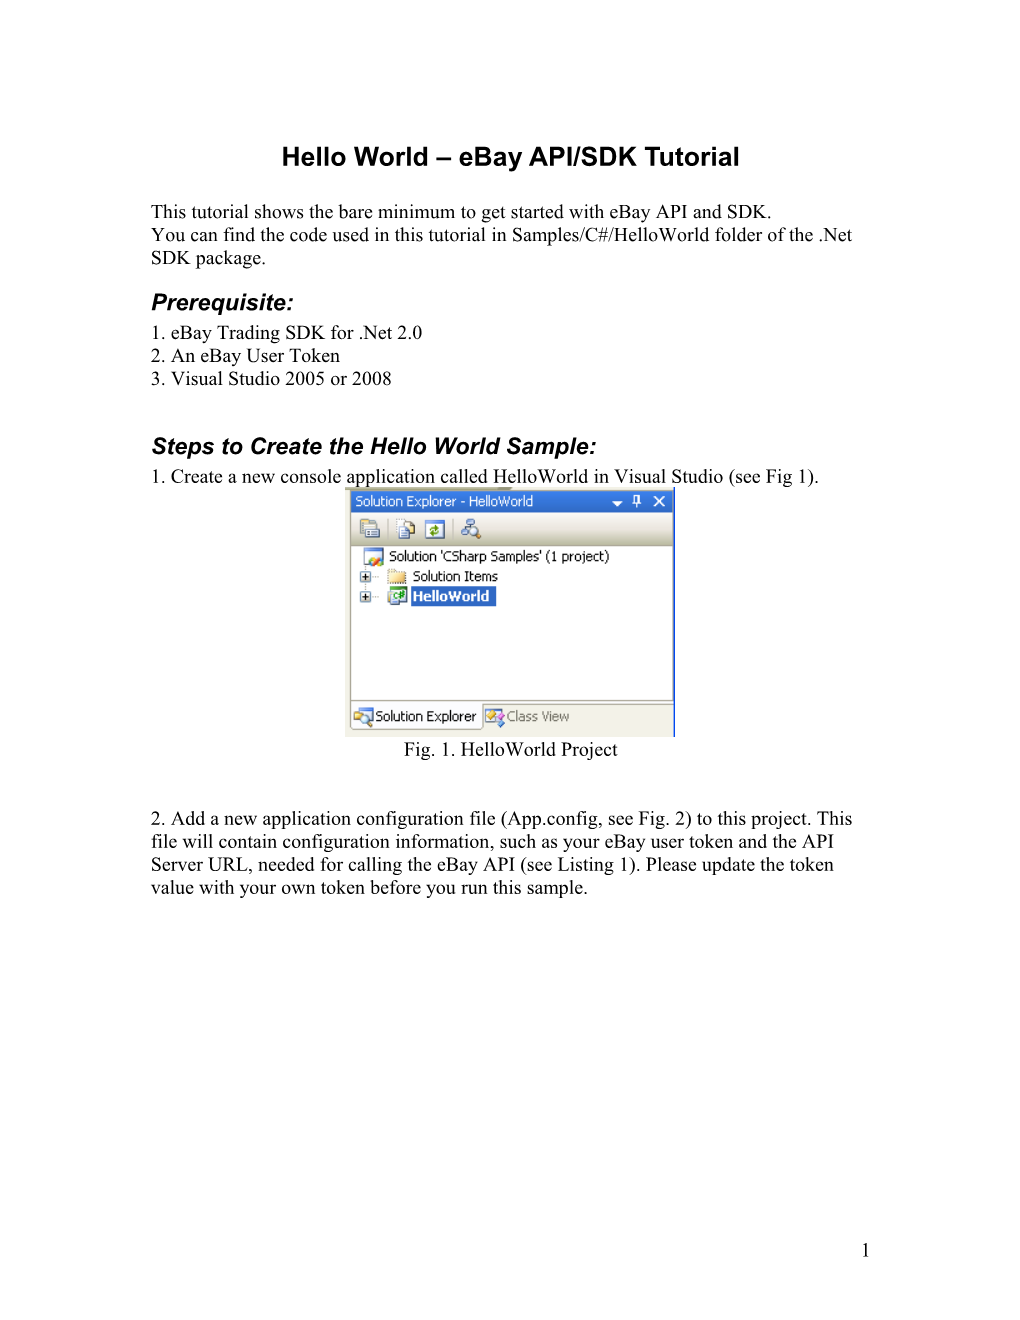 Hello World Ebay API/SDK Tutorial